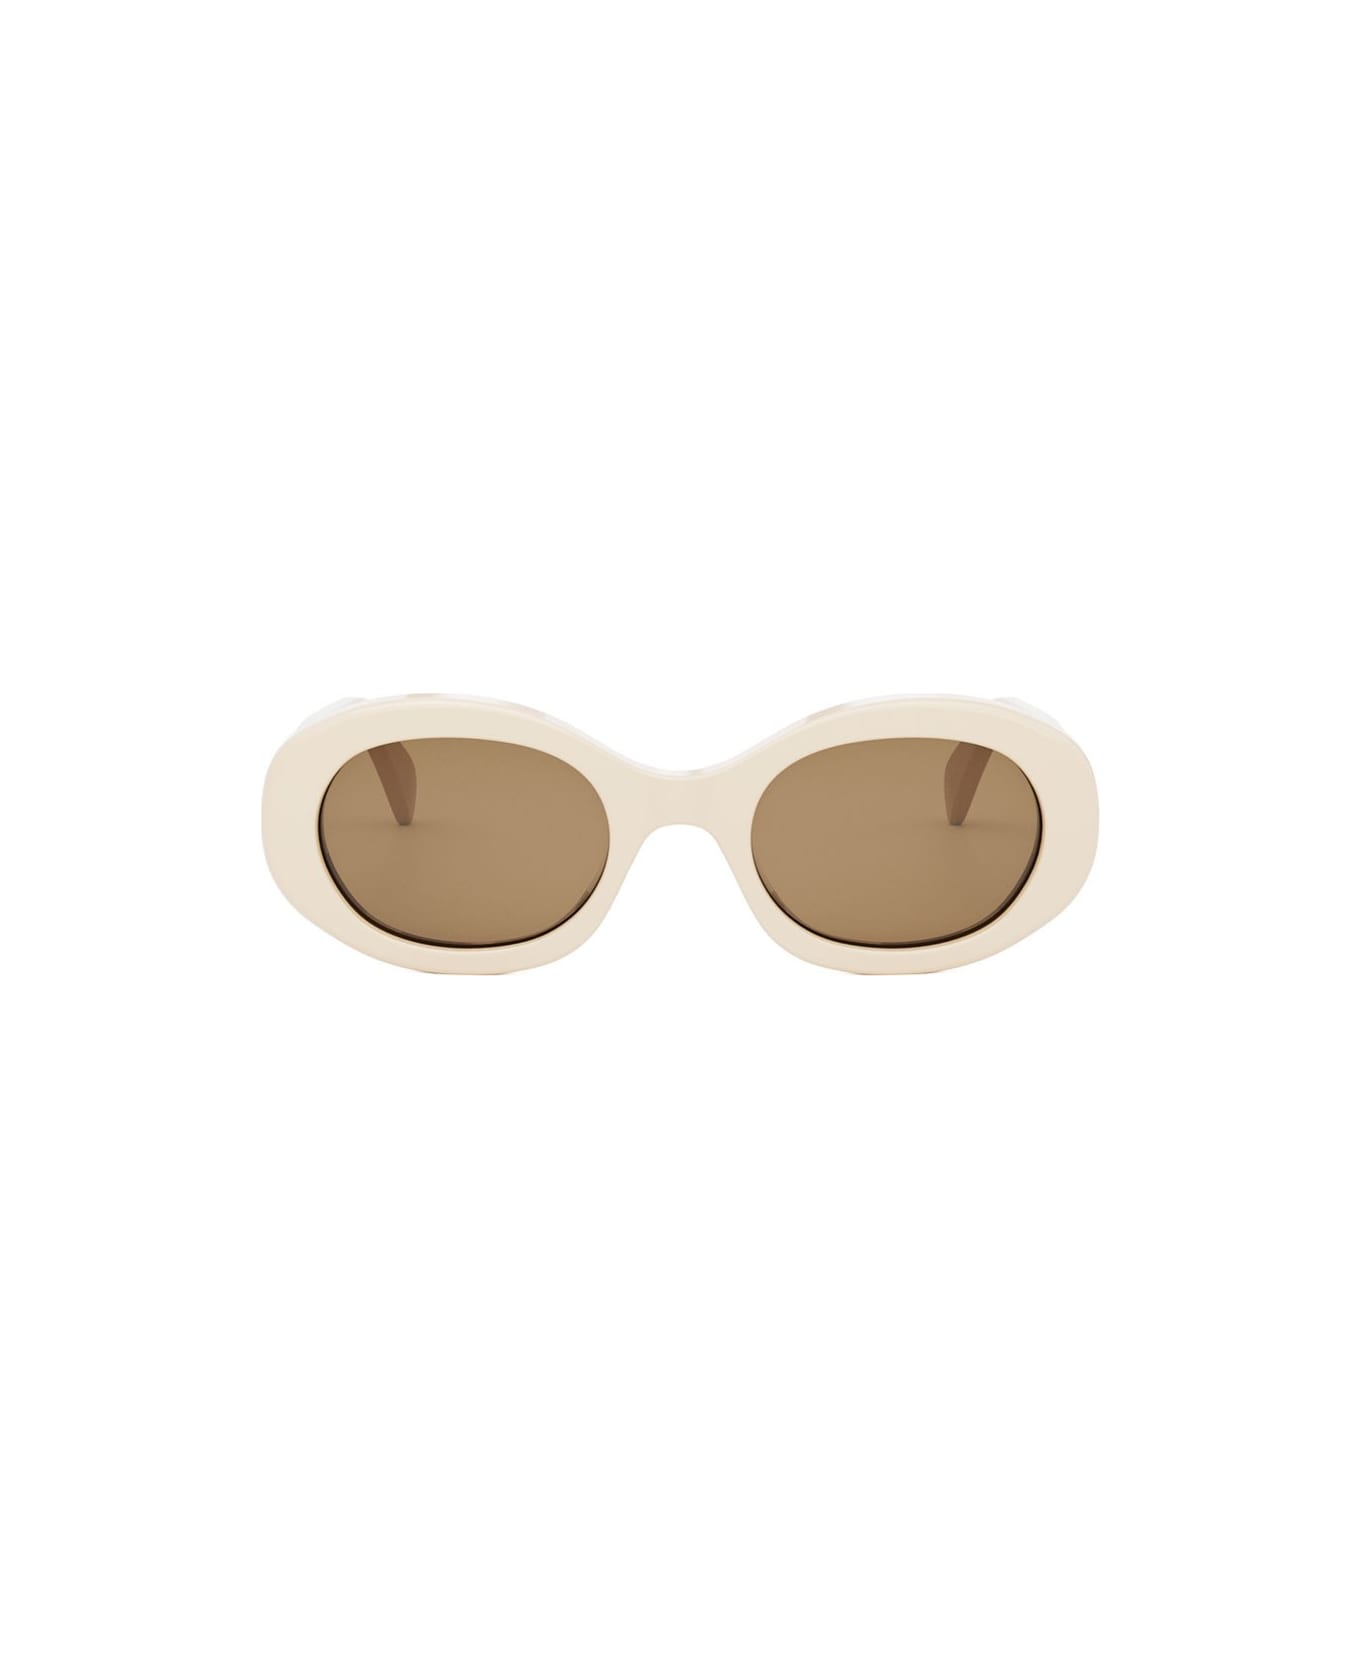 Celine Sunglasses - Avorio/Marrone